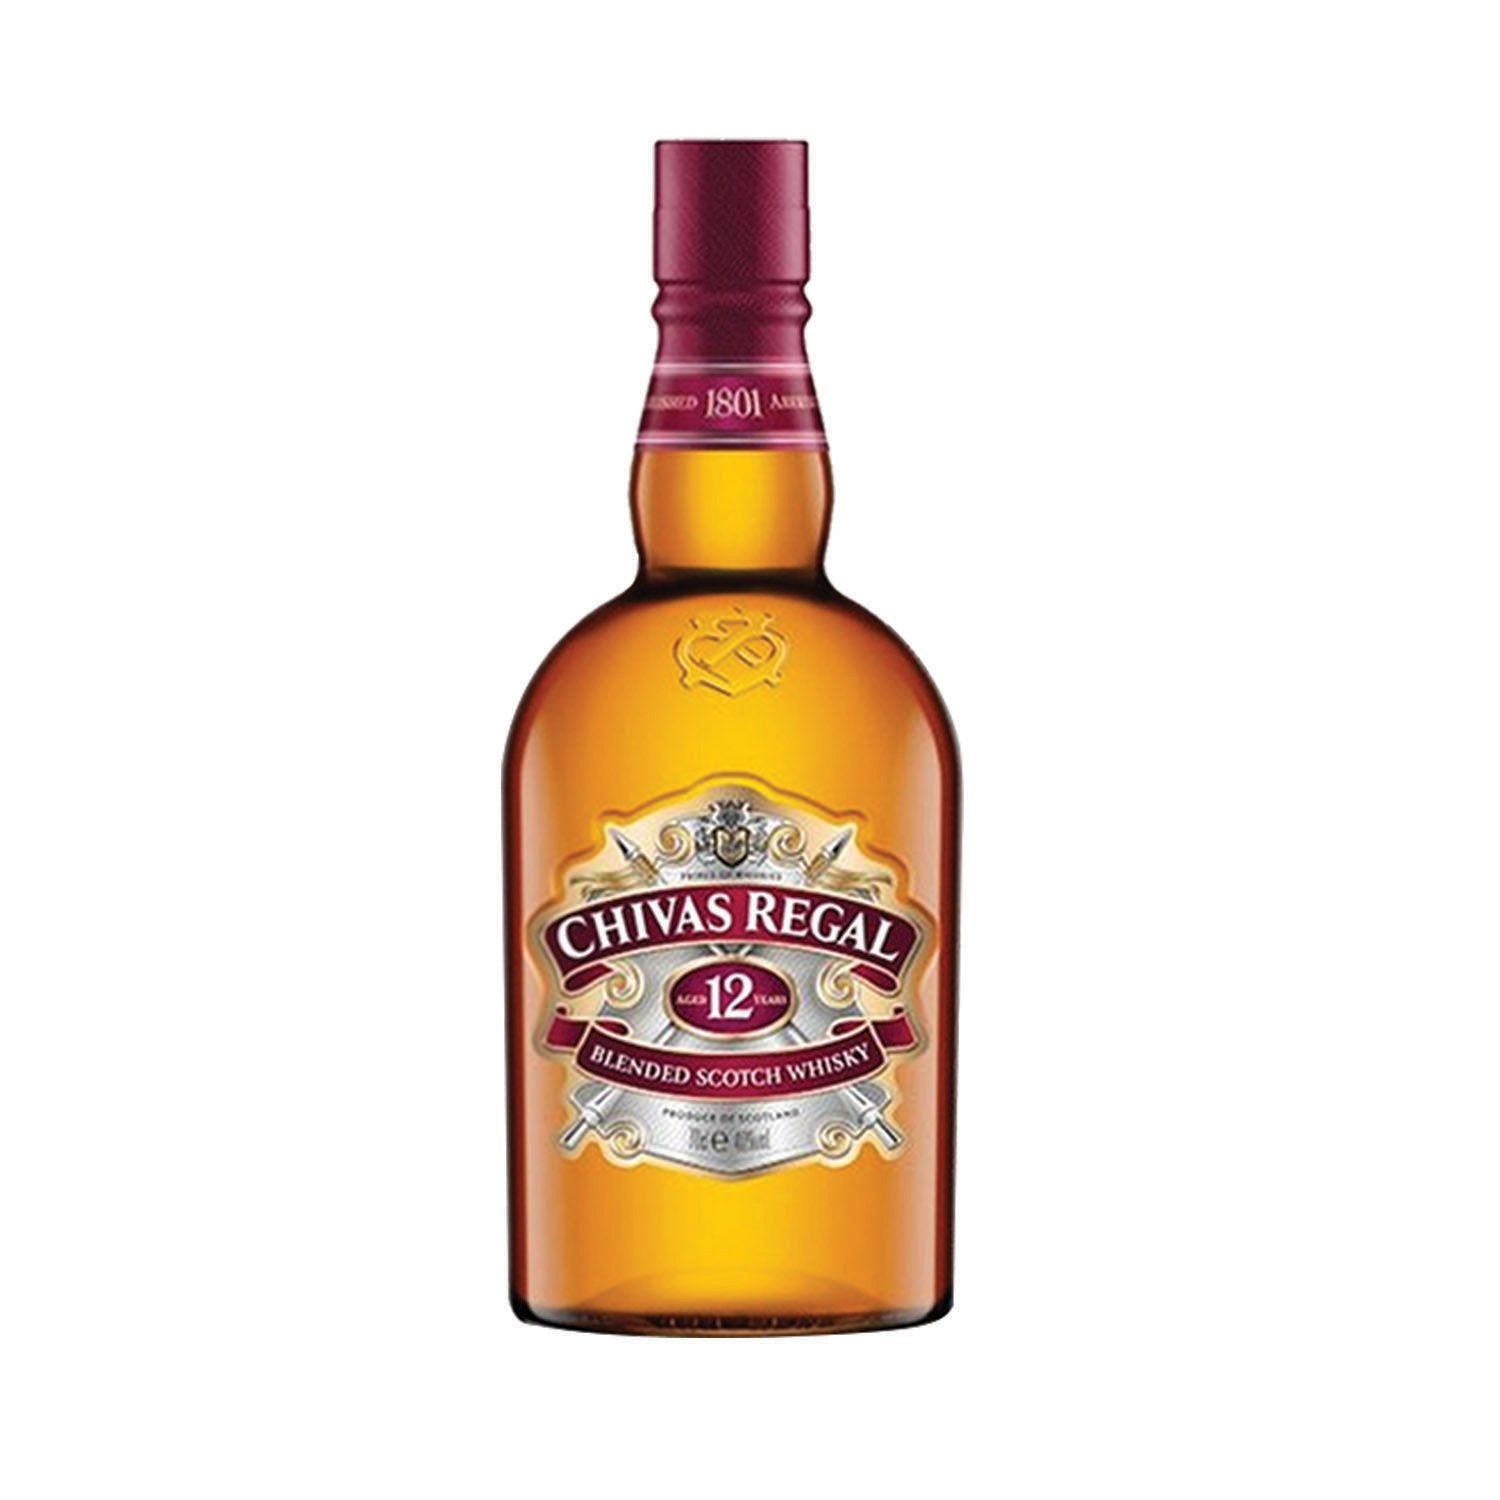 bvi>Chivas Regal # 12 Scotch Whisky - 750 ml